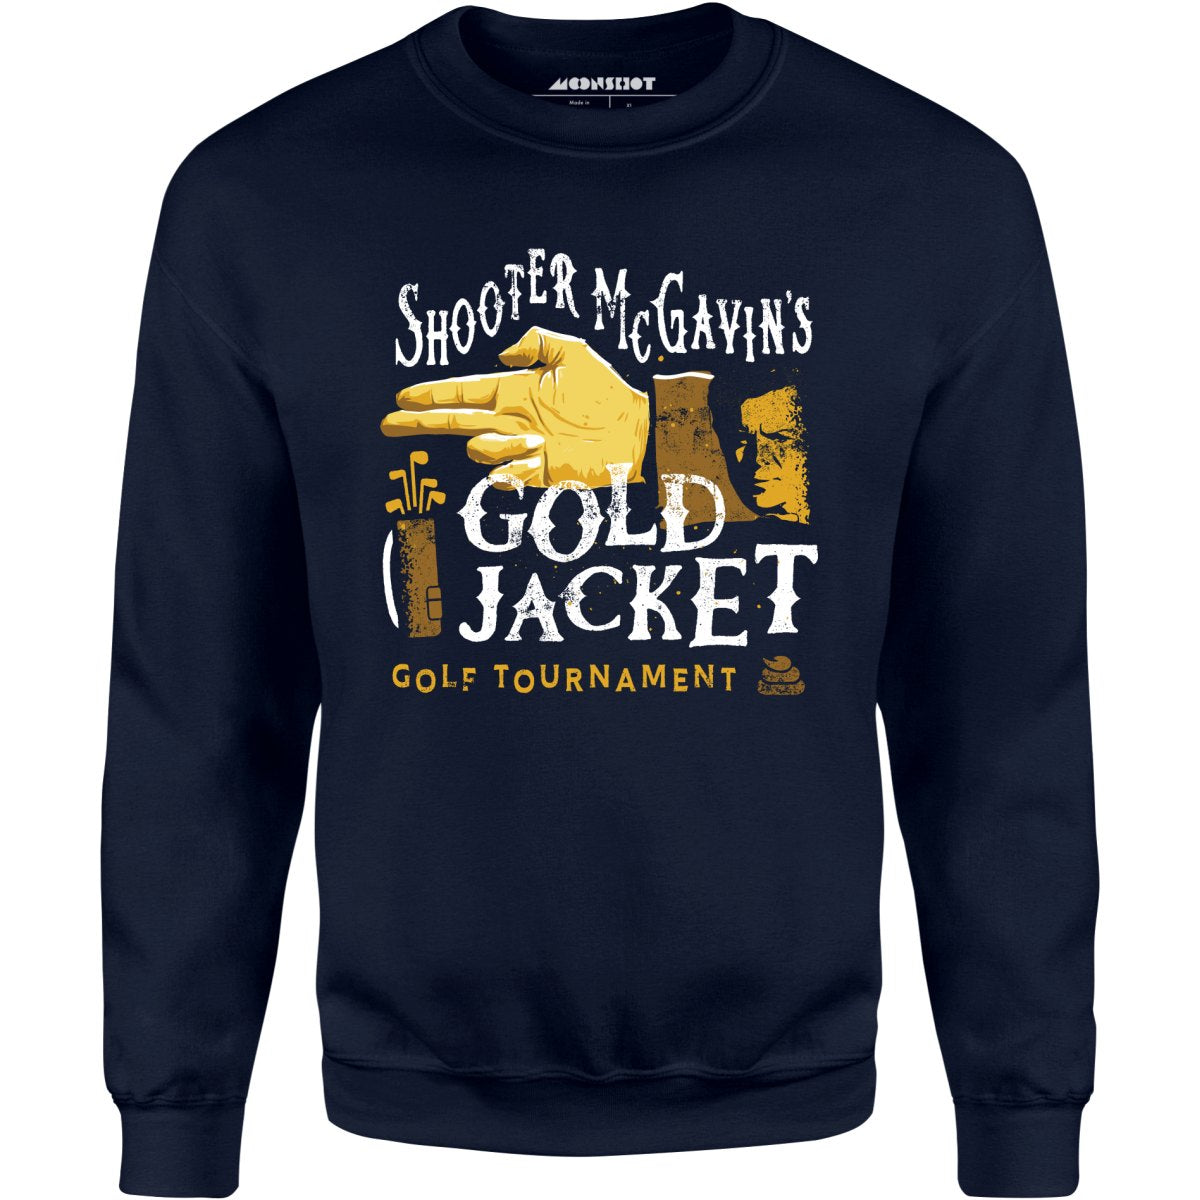 Shooter McGavin's Gold Jacket Golf Tournament - Unisex Sweatshirt